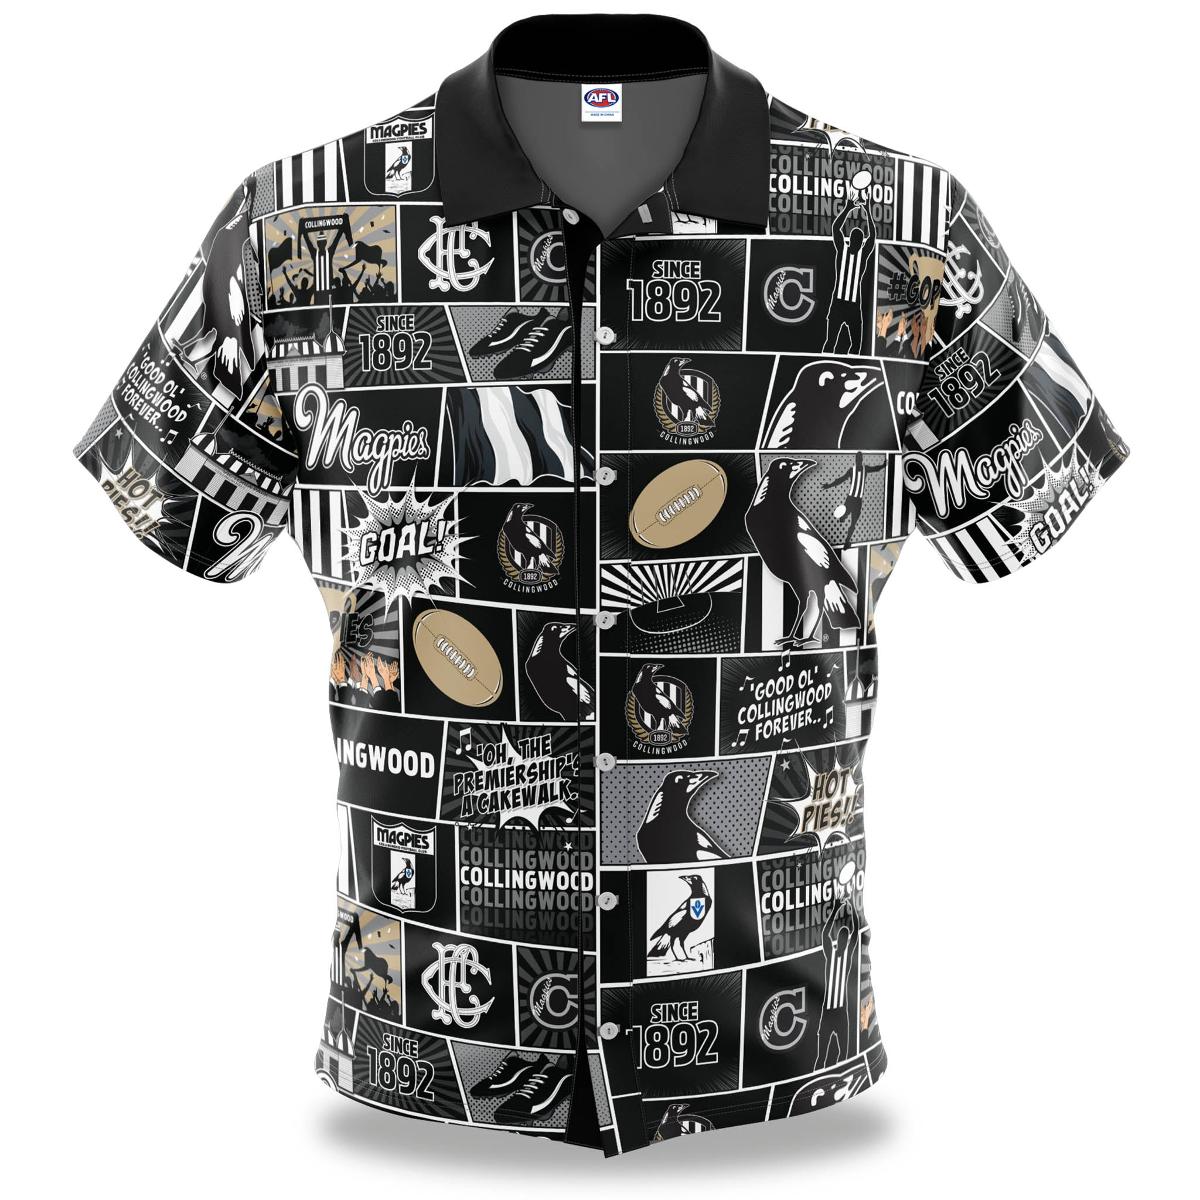 Afl Essendon Bombers Football Team Since 1872 Vintage Aloha Shirt Gift For Fans